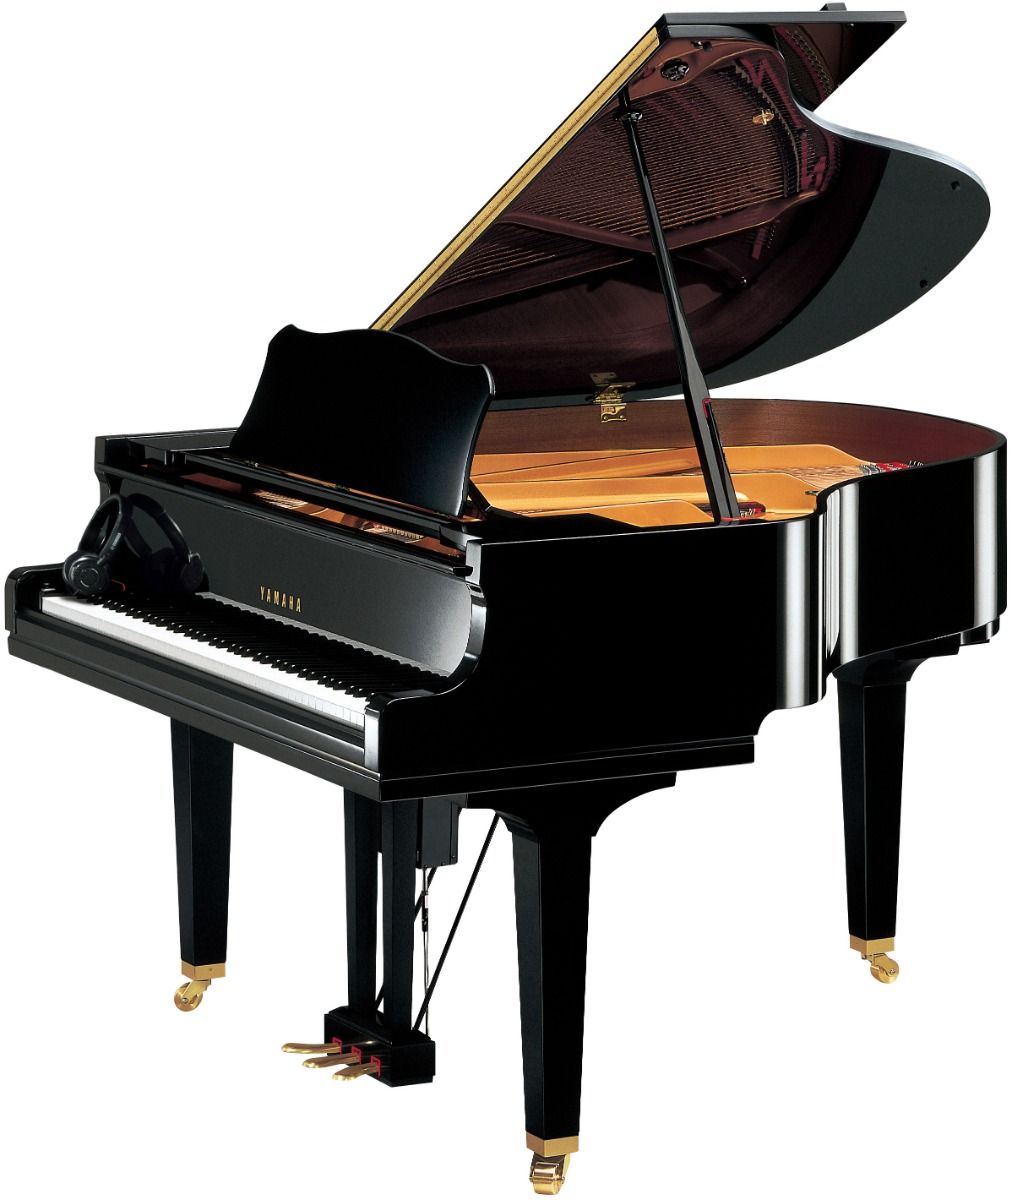 Yamaha DGC1 ENST 5'3" Enspire Disklavier Piano in Polished Ebony